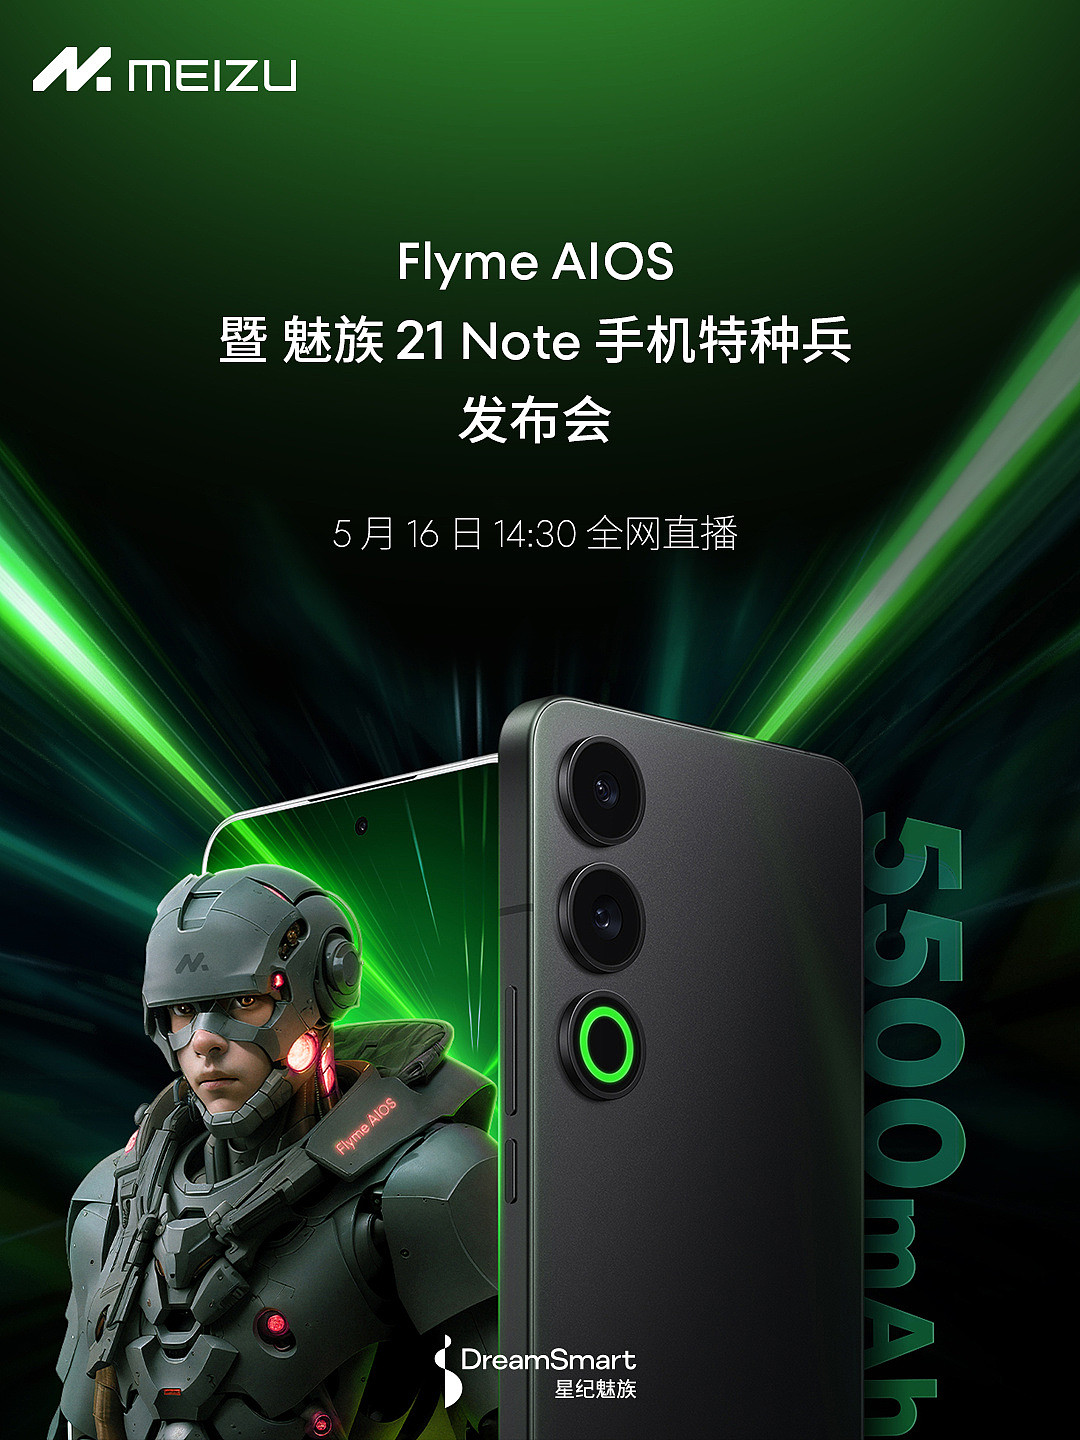 Flyme AIOS 暨魅族 21 Note 手机特种兵发布会 5 月 16 日举行 - 1